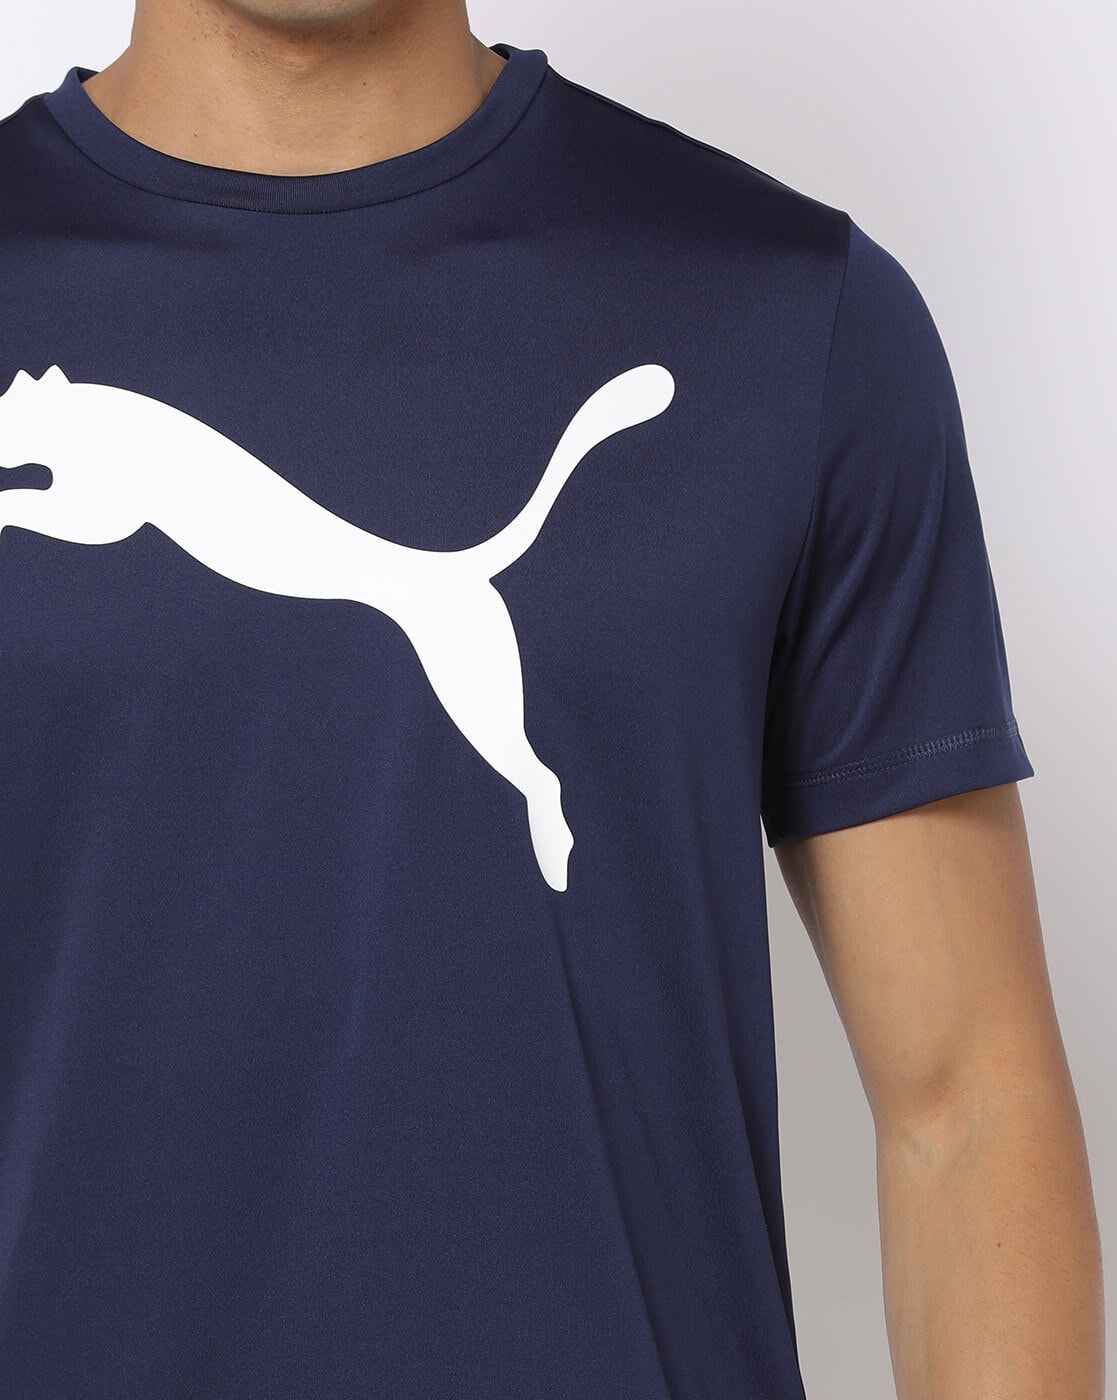 Tshirts Puma Online for Men Blue Buy by